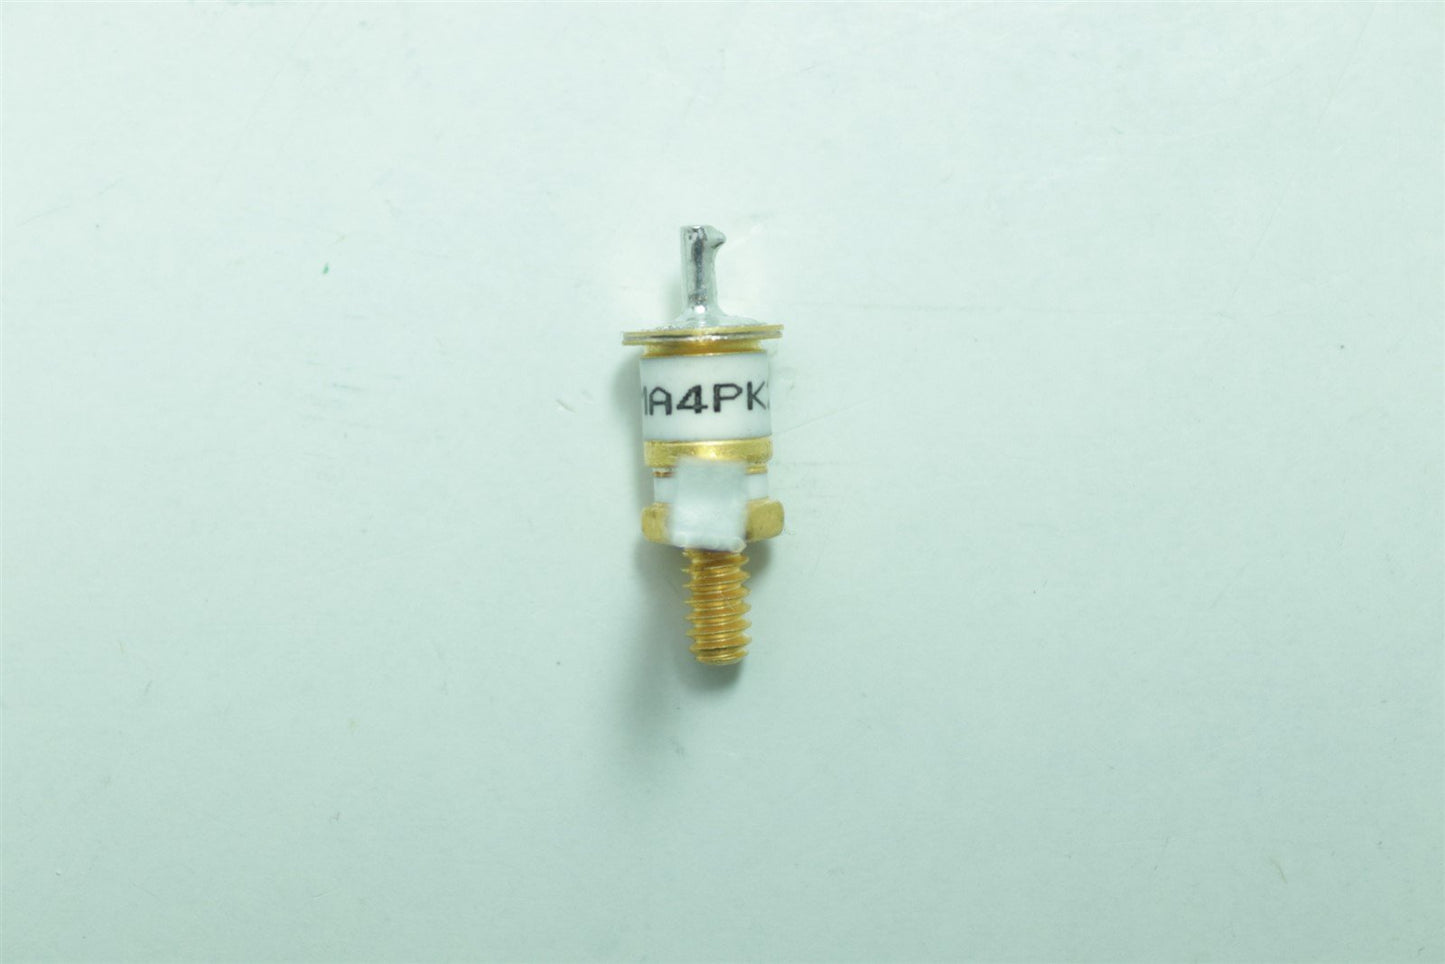 2X Macom PIN Switch and Attenuator Diodes RF MA4PK2003 HF Amateur Radio